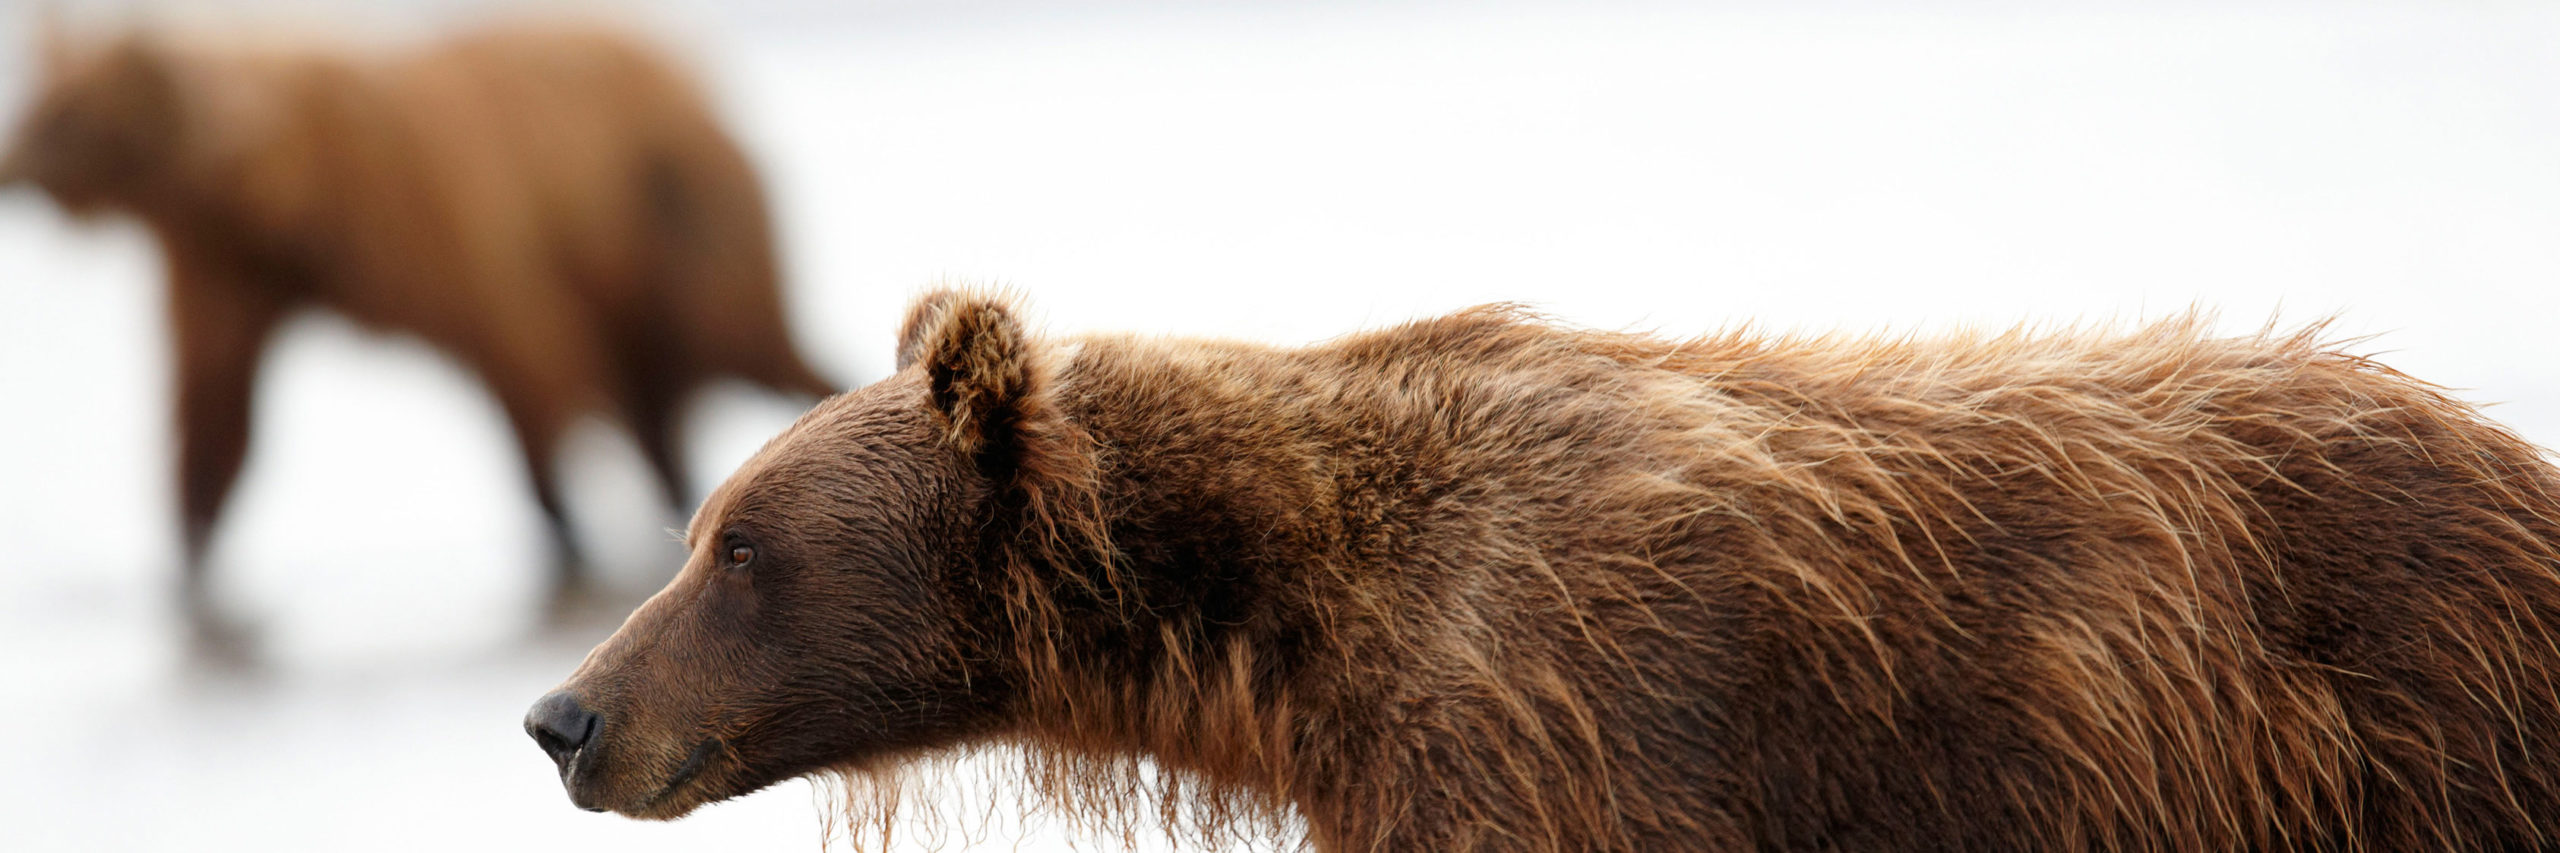 The Best Bear Watching in Alaska